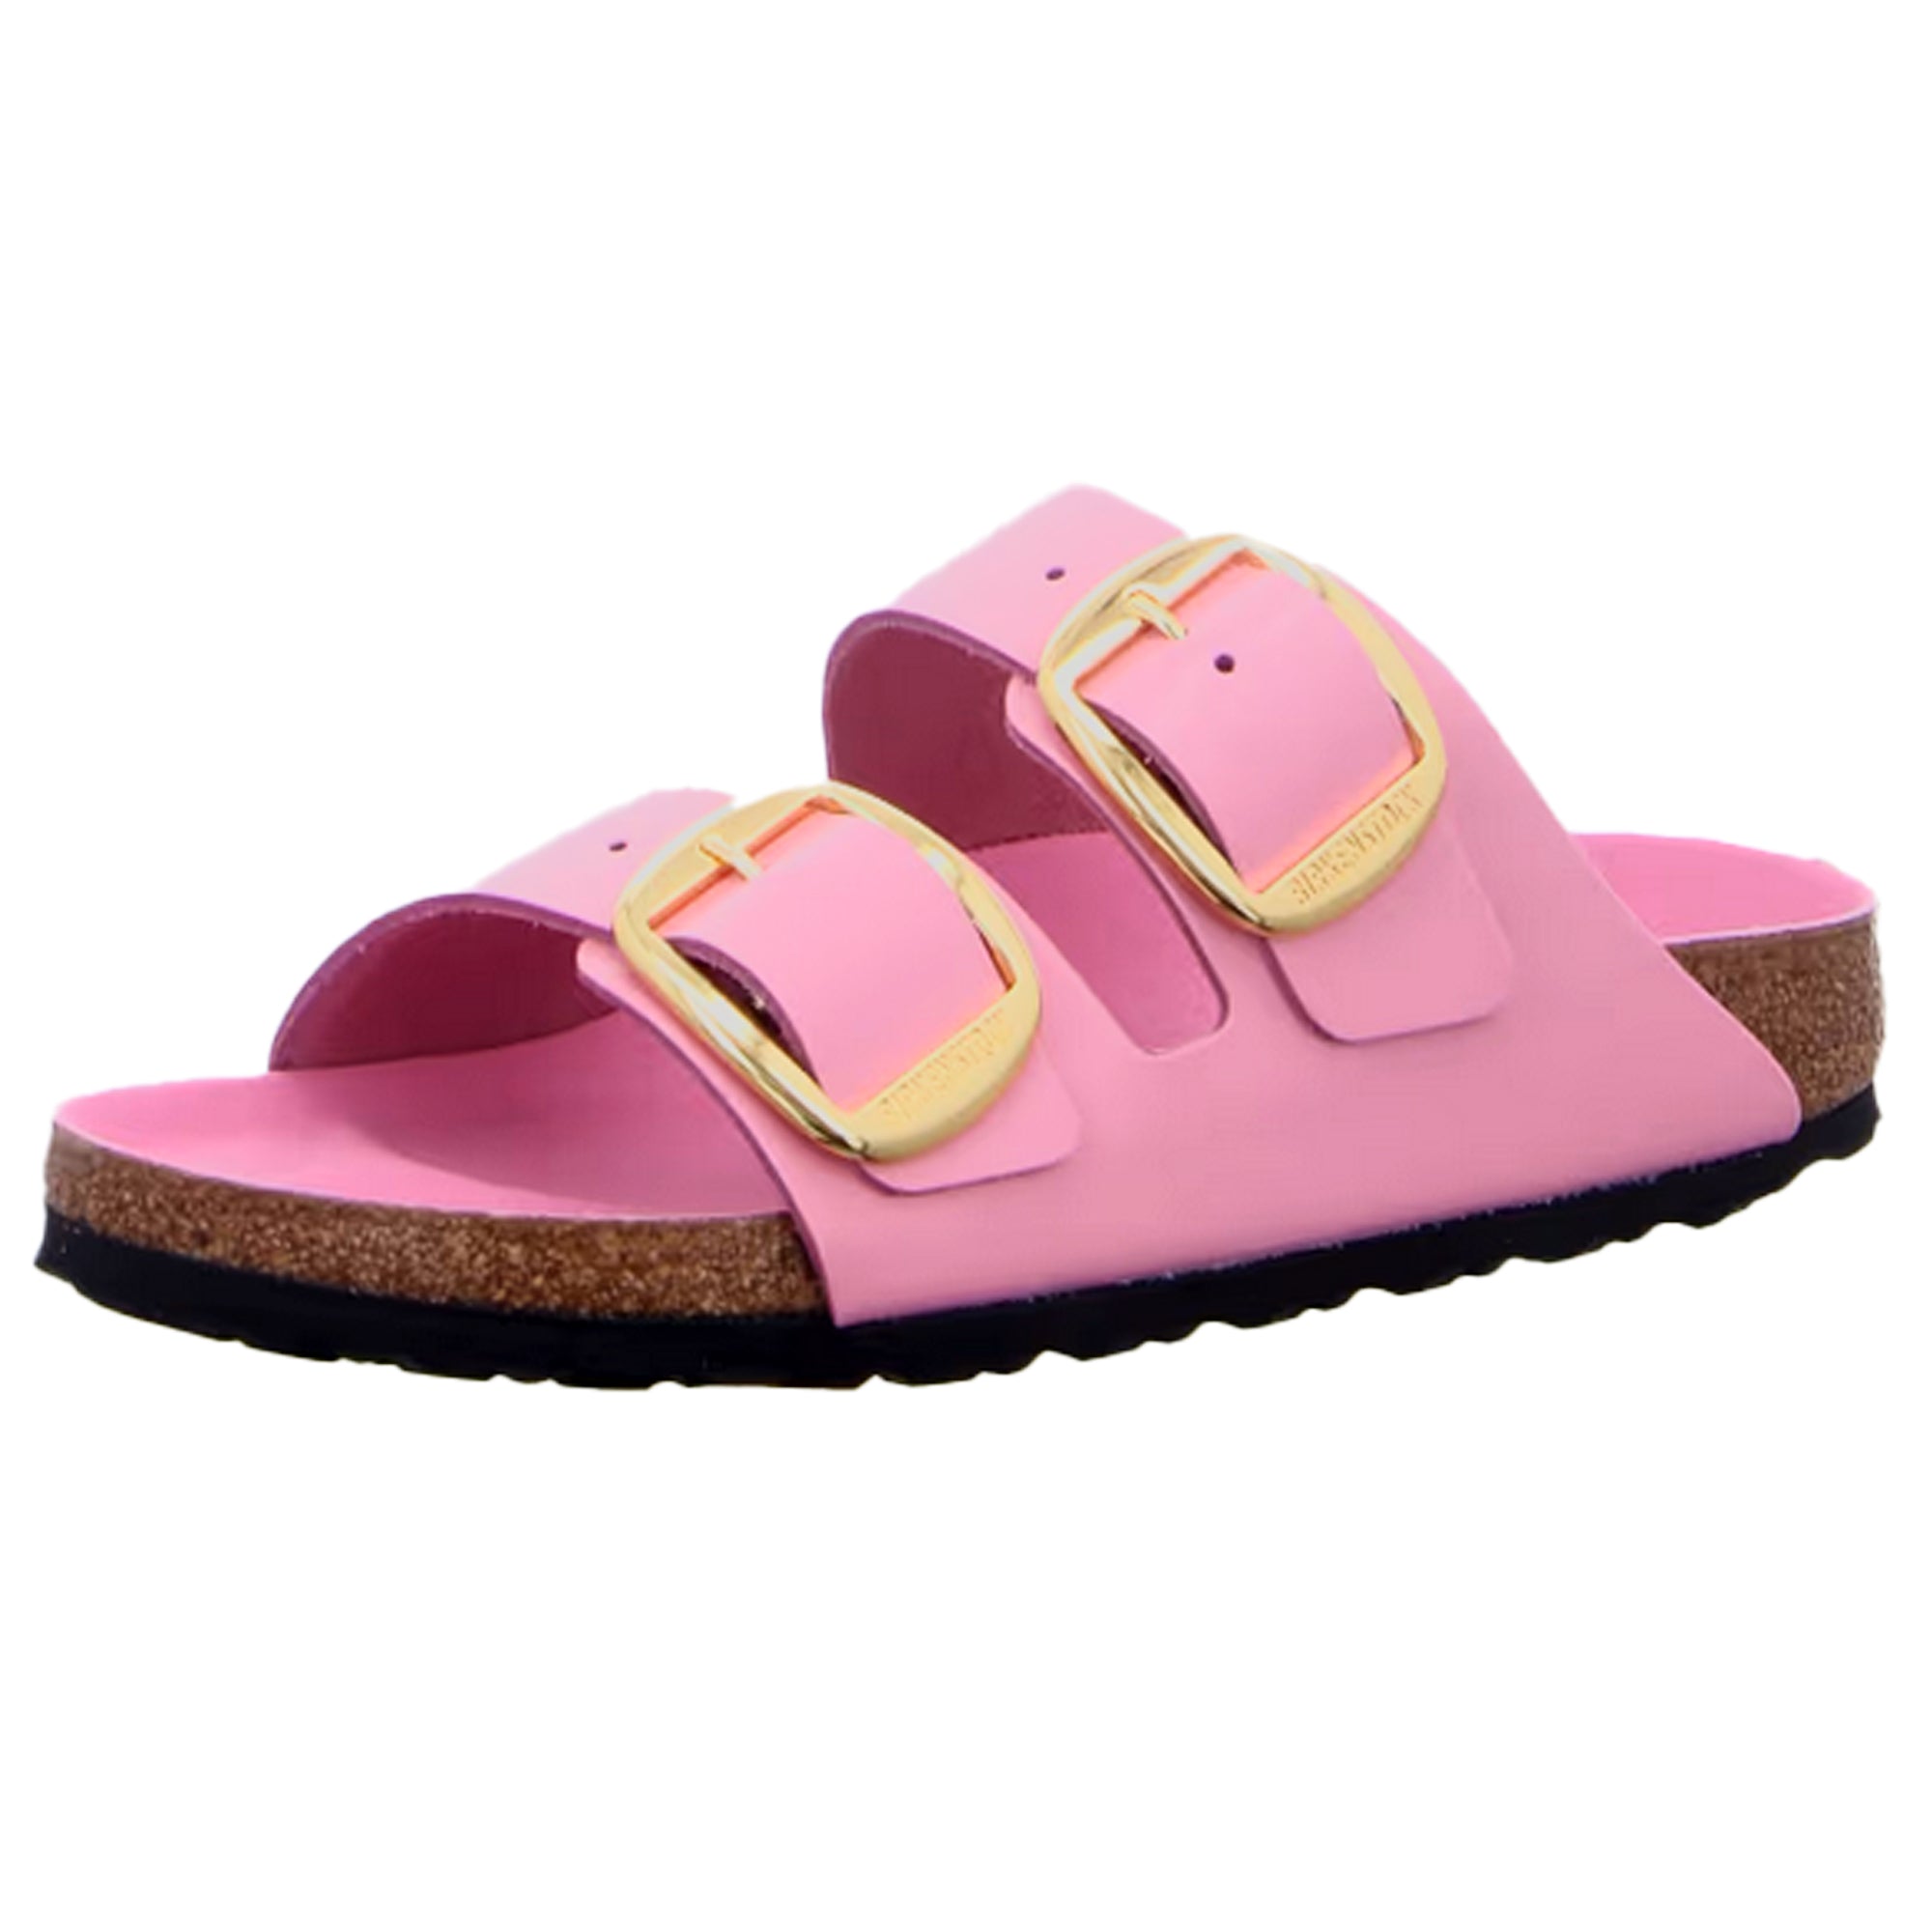 Birkenstock Arizona Big Buckle High Shine Patent Pink Green Sandals Slides NEW